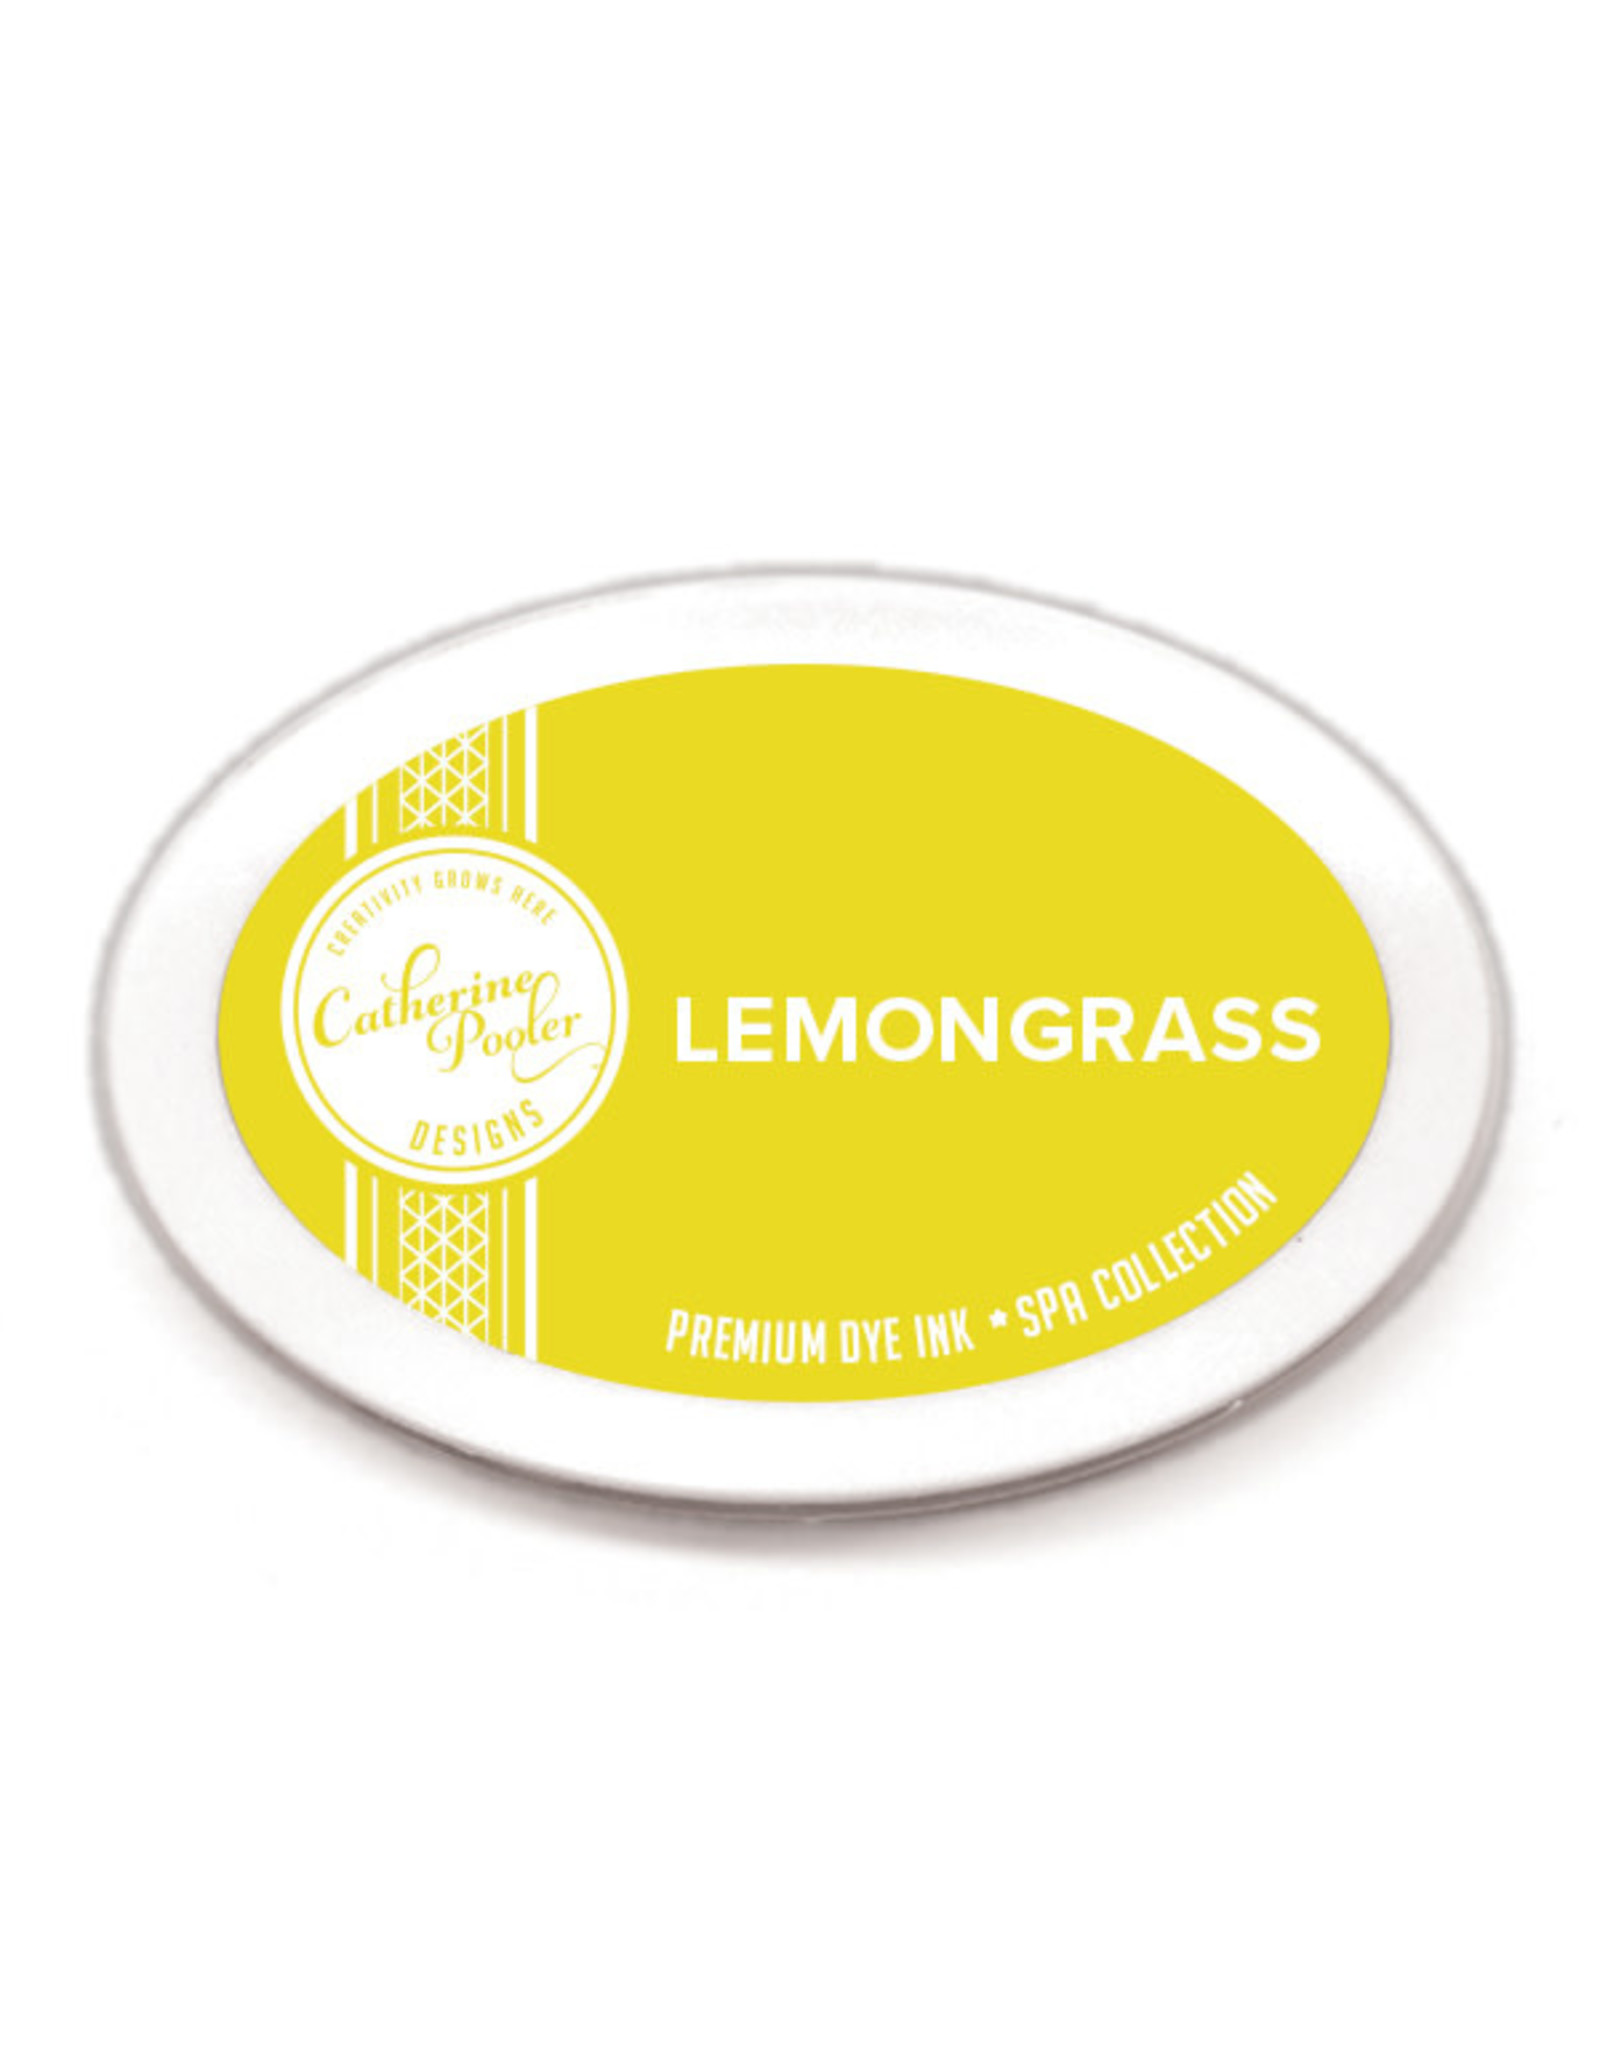 Catherine Pooler Designs Lemongrass Ink Pad